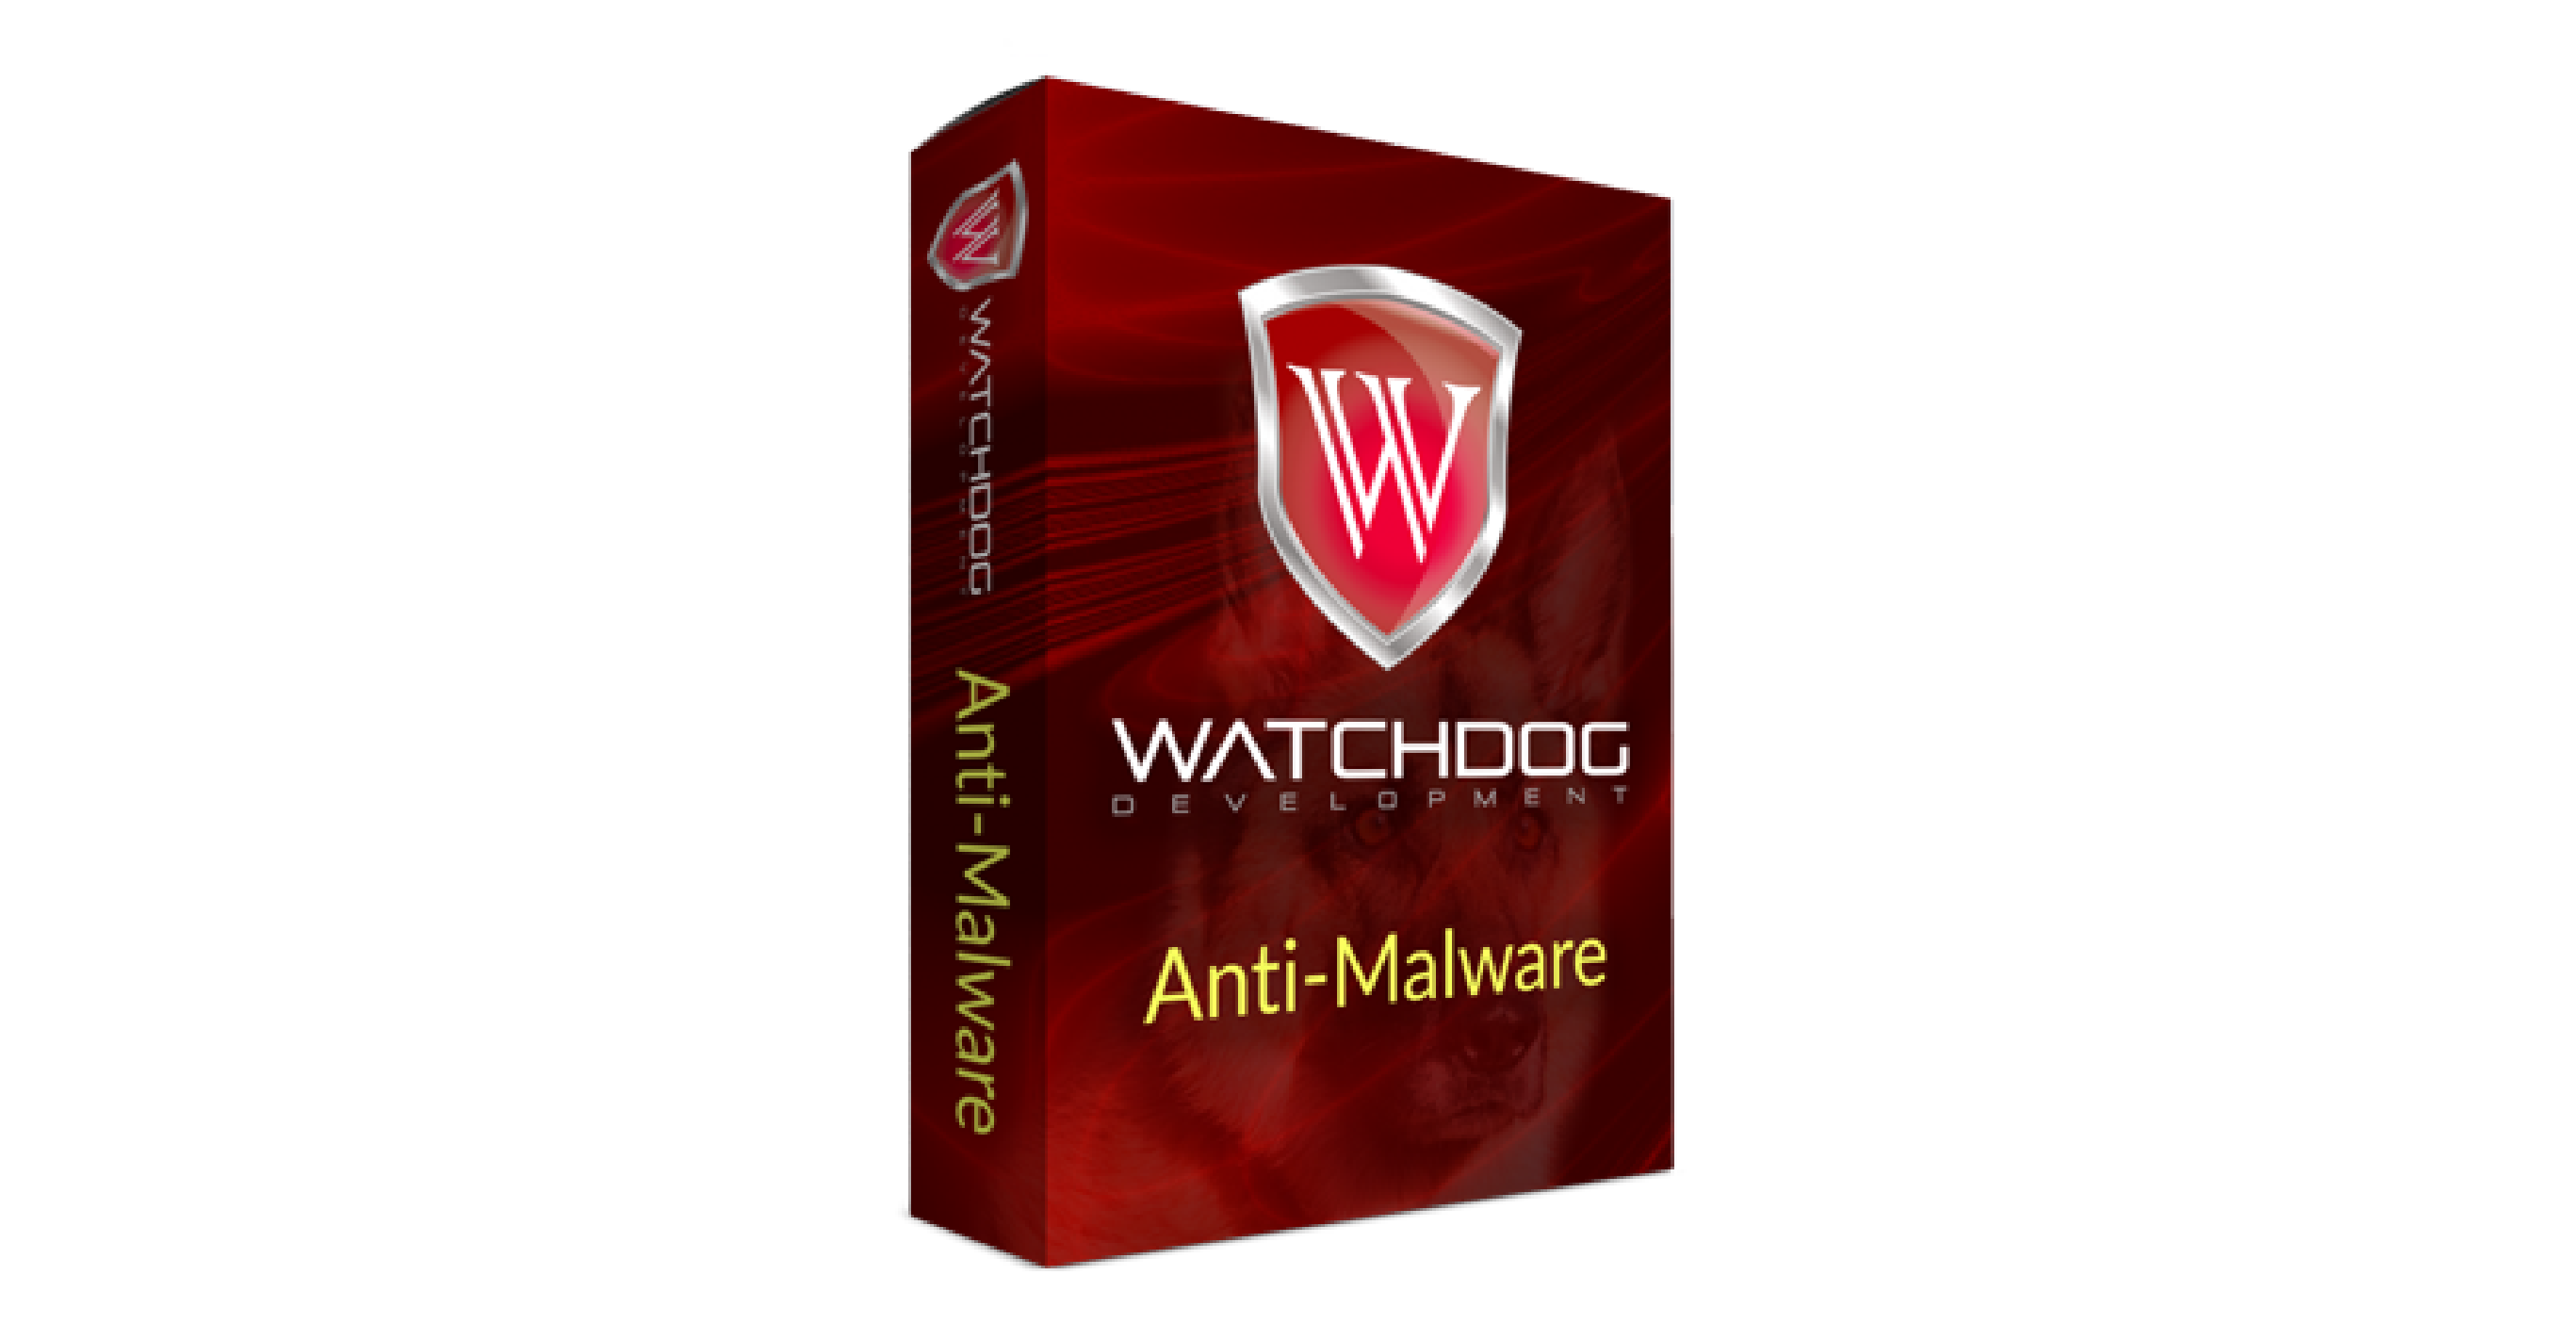 Watchdog Anti-Malware 4.2.82 free